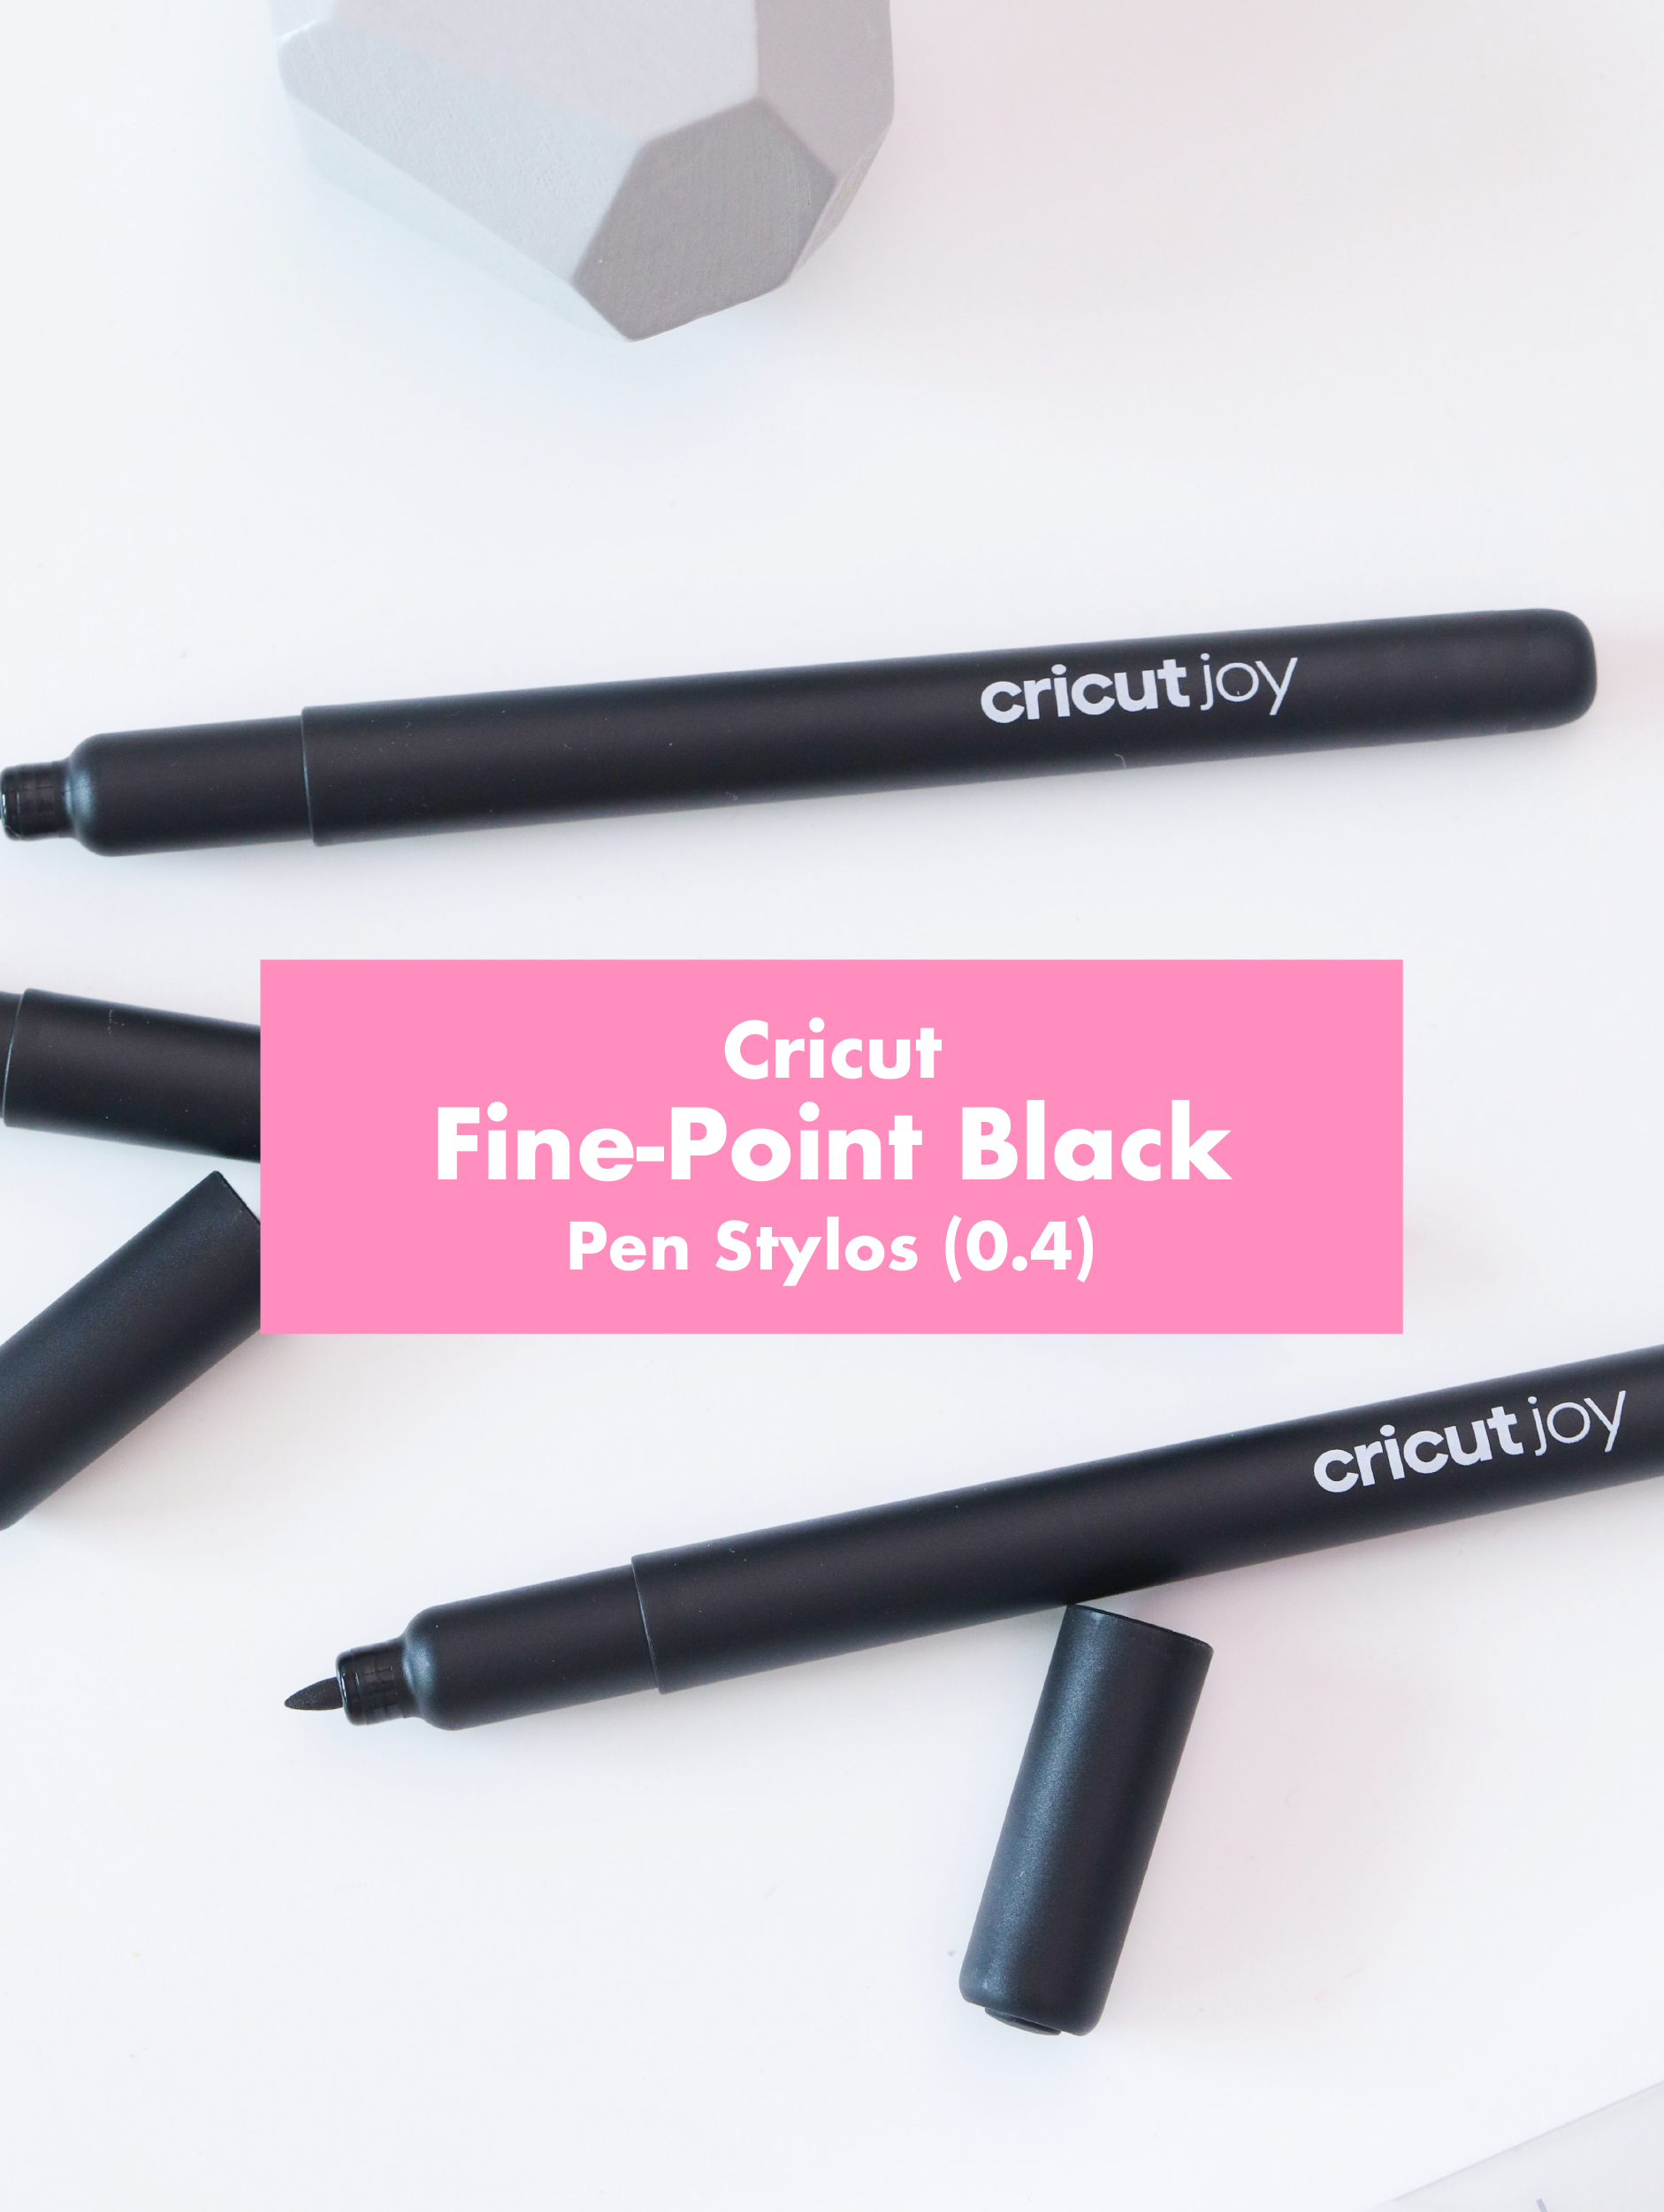 Cricut Infusible Ink Black Pens - 5 ct